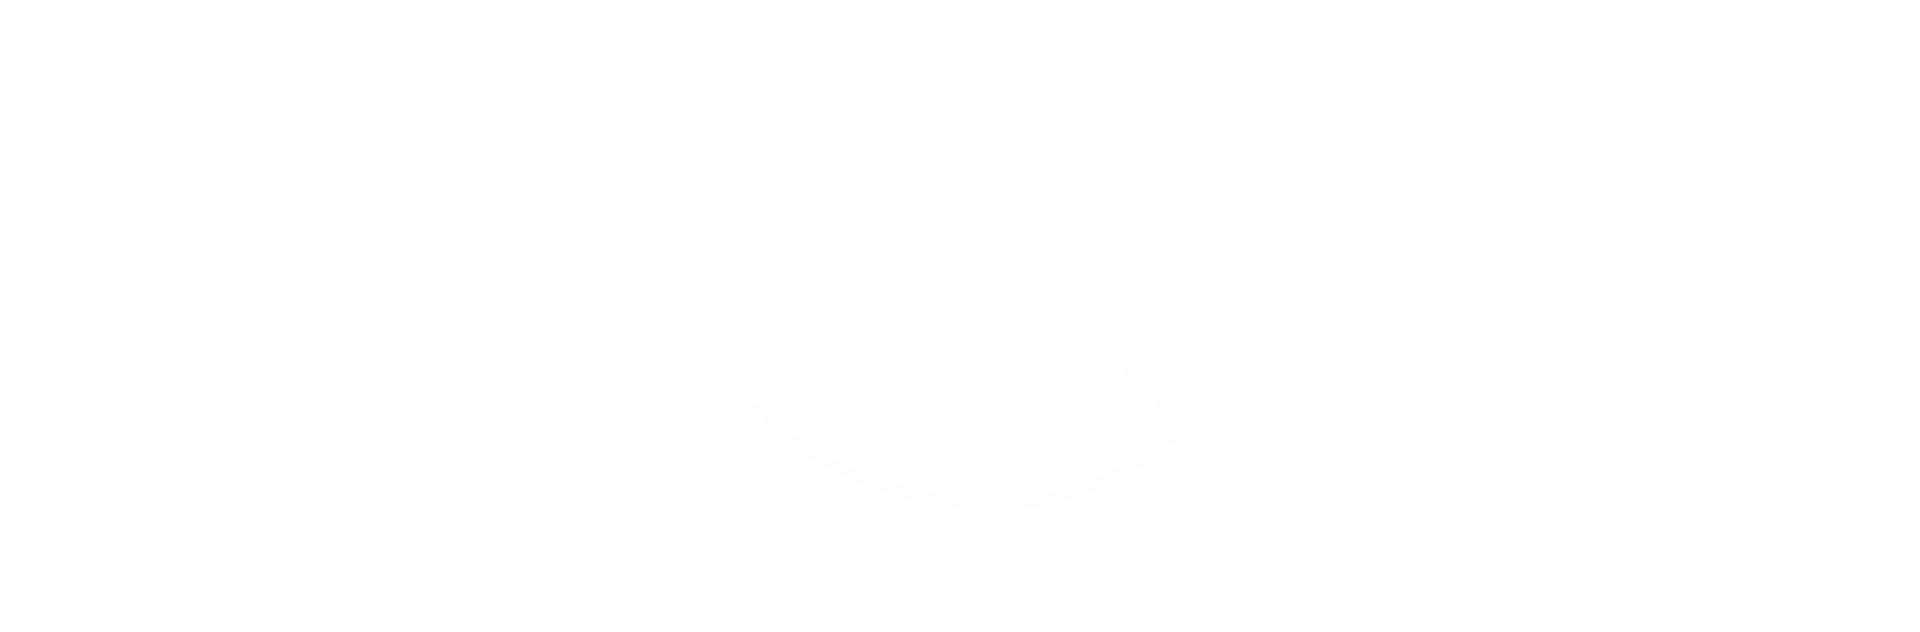 Podcast Header Image